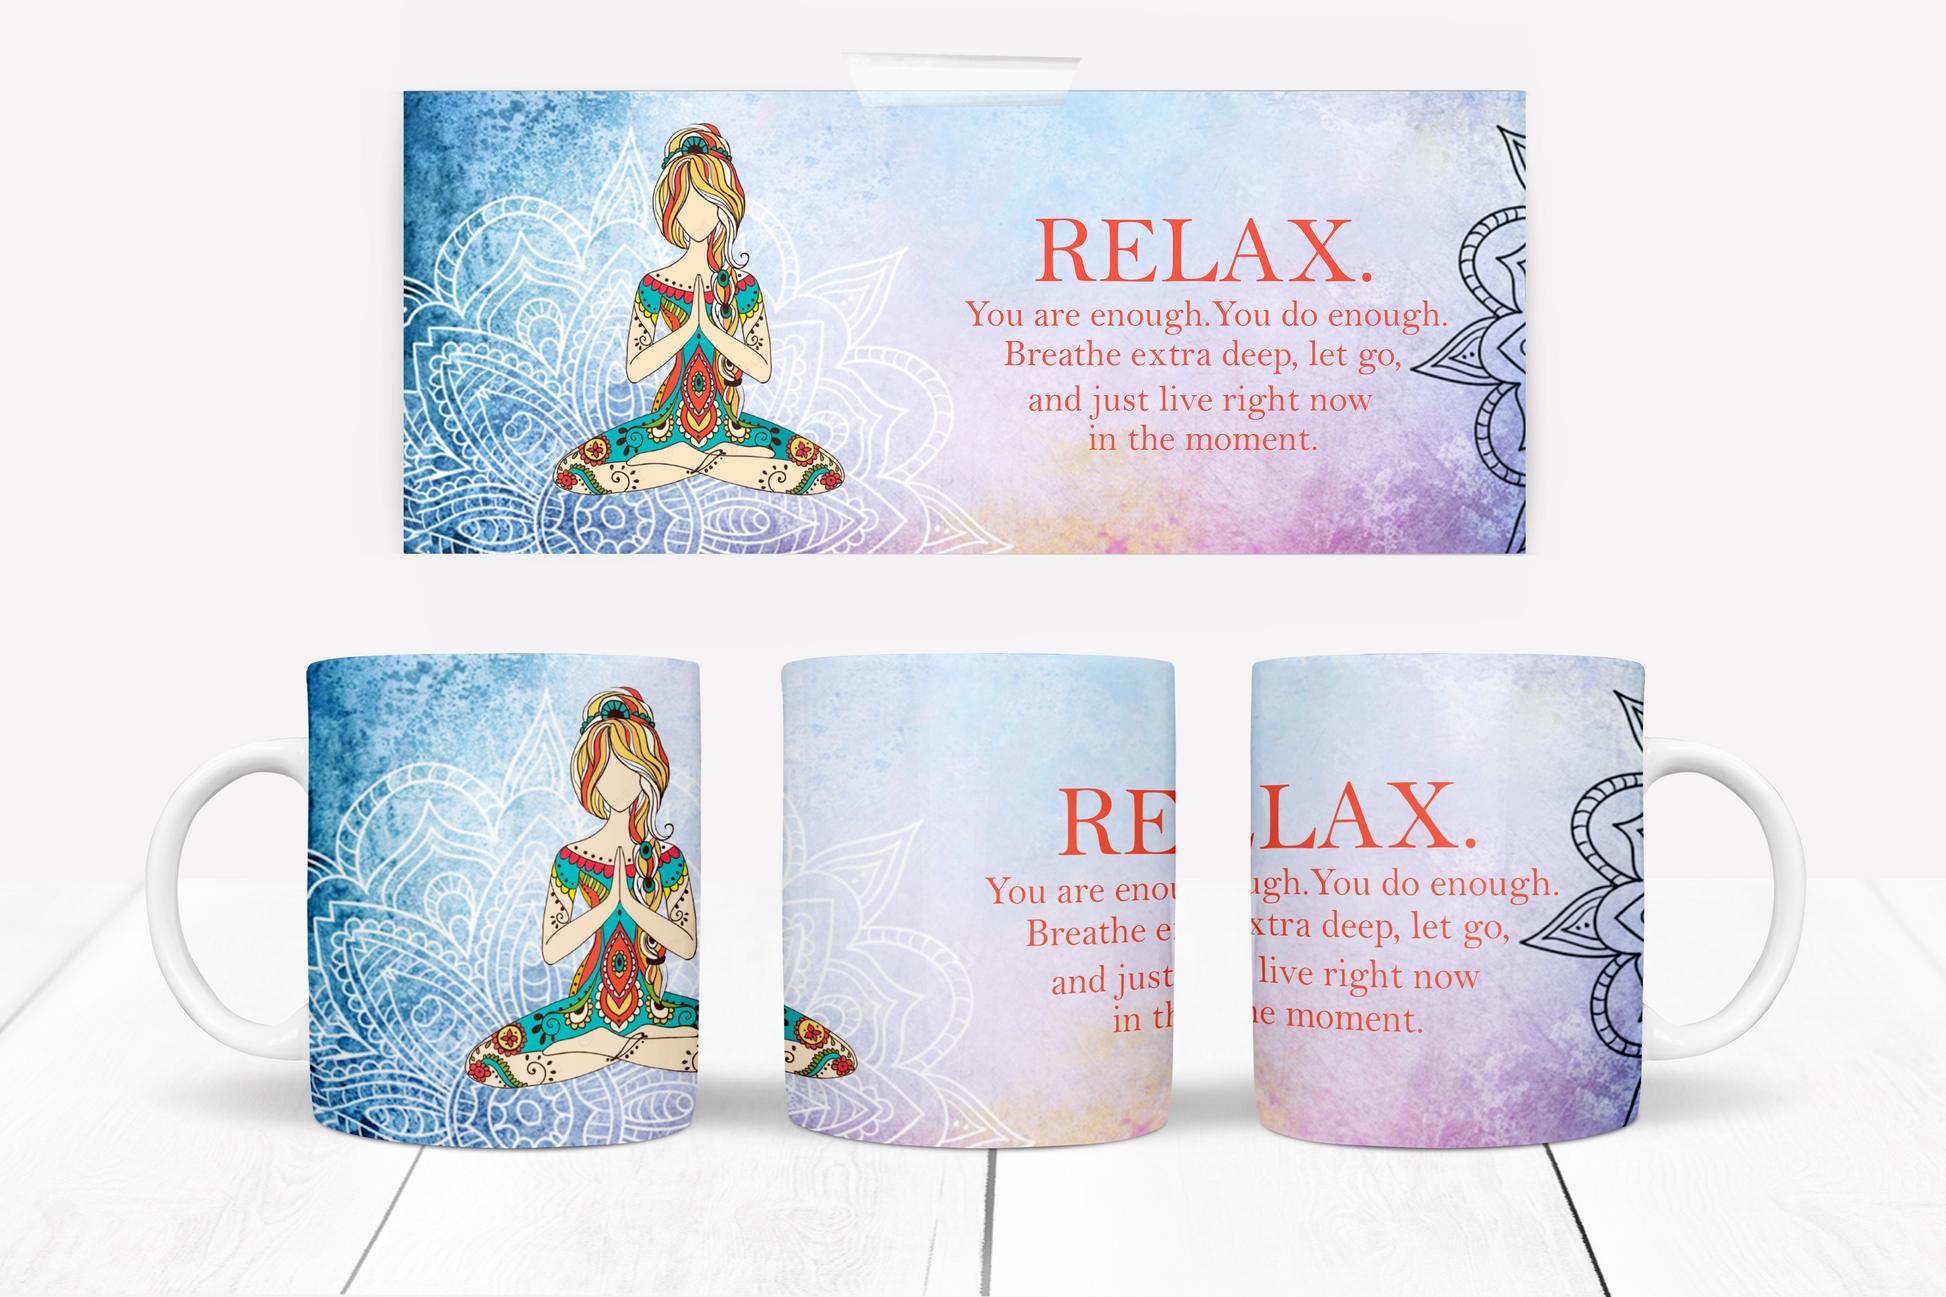  Relax Meditation Coffee Mug by Free Spirit Accessories sold by Free Spirit Accessories